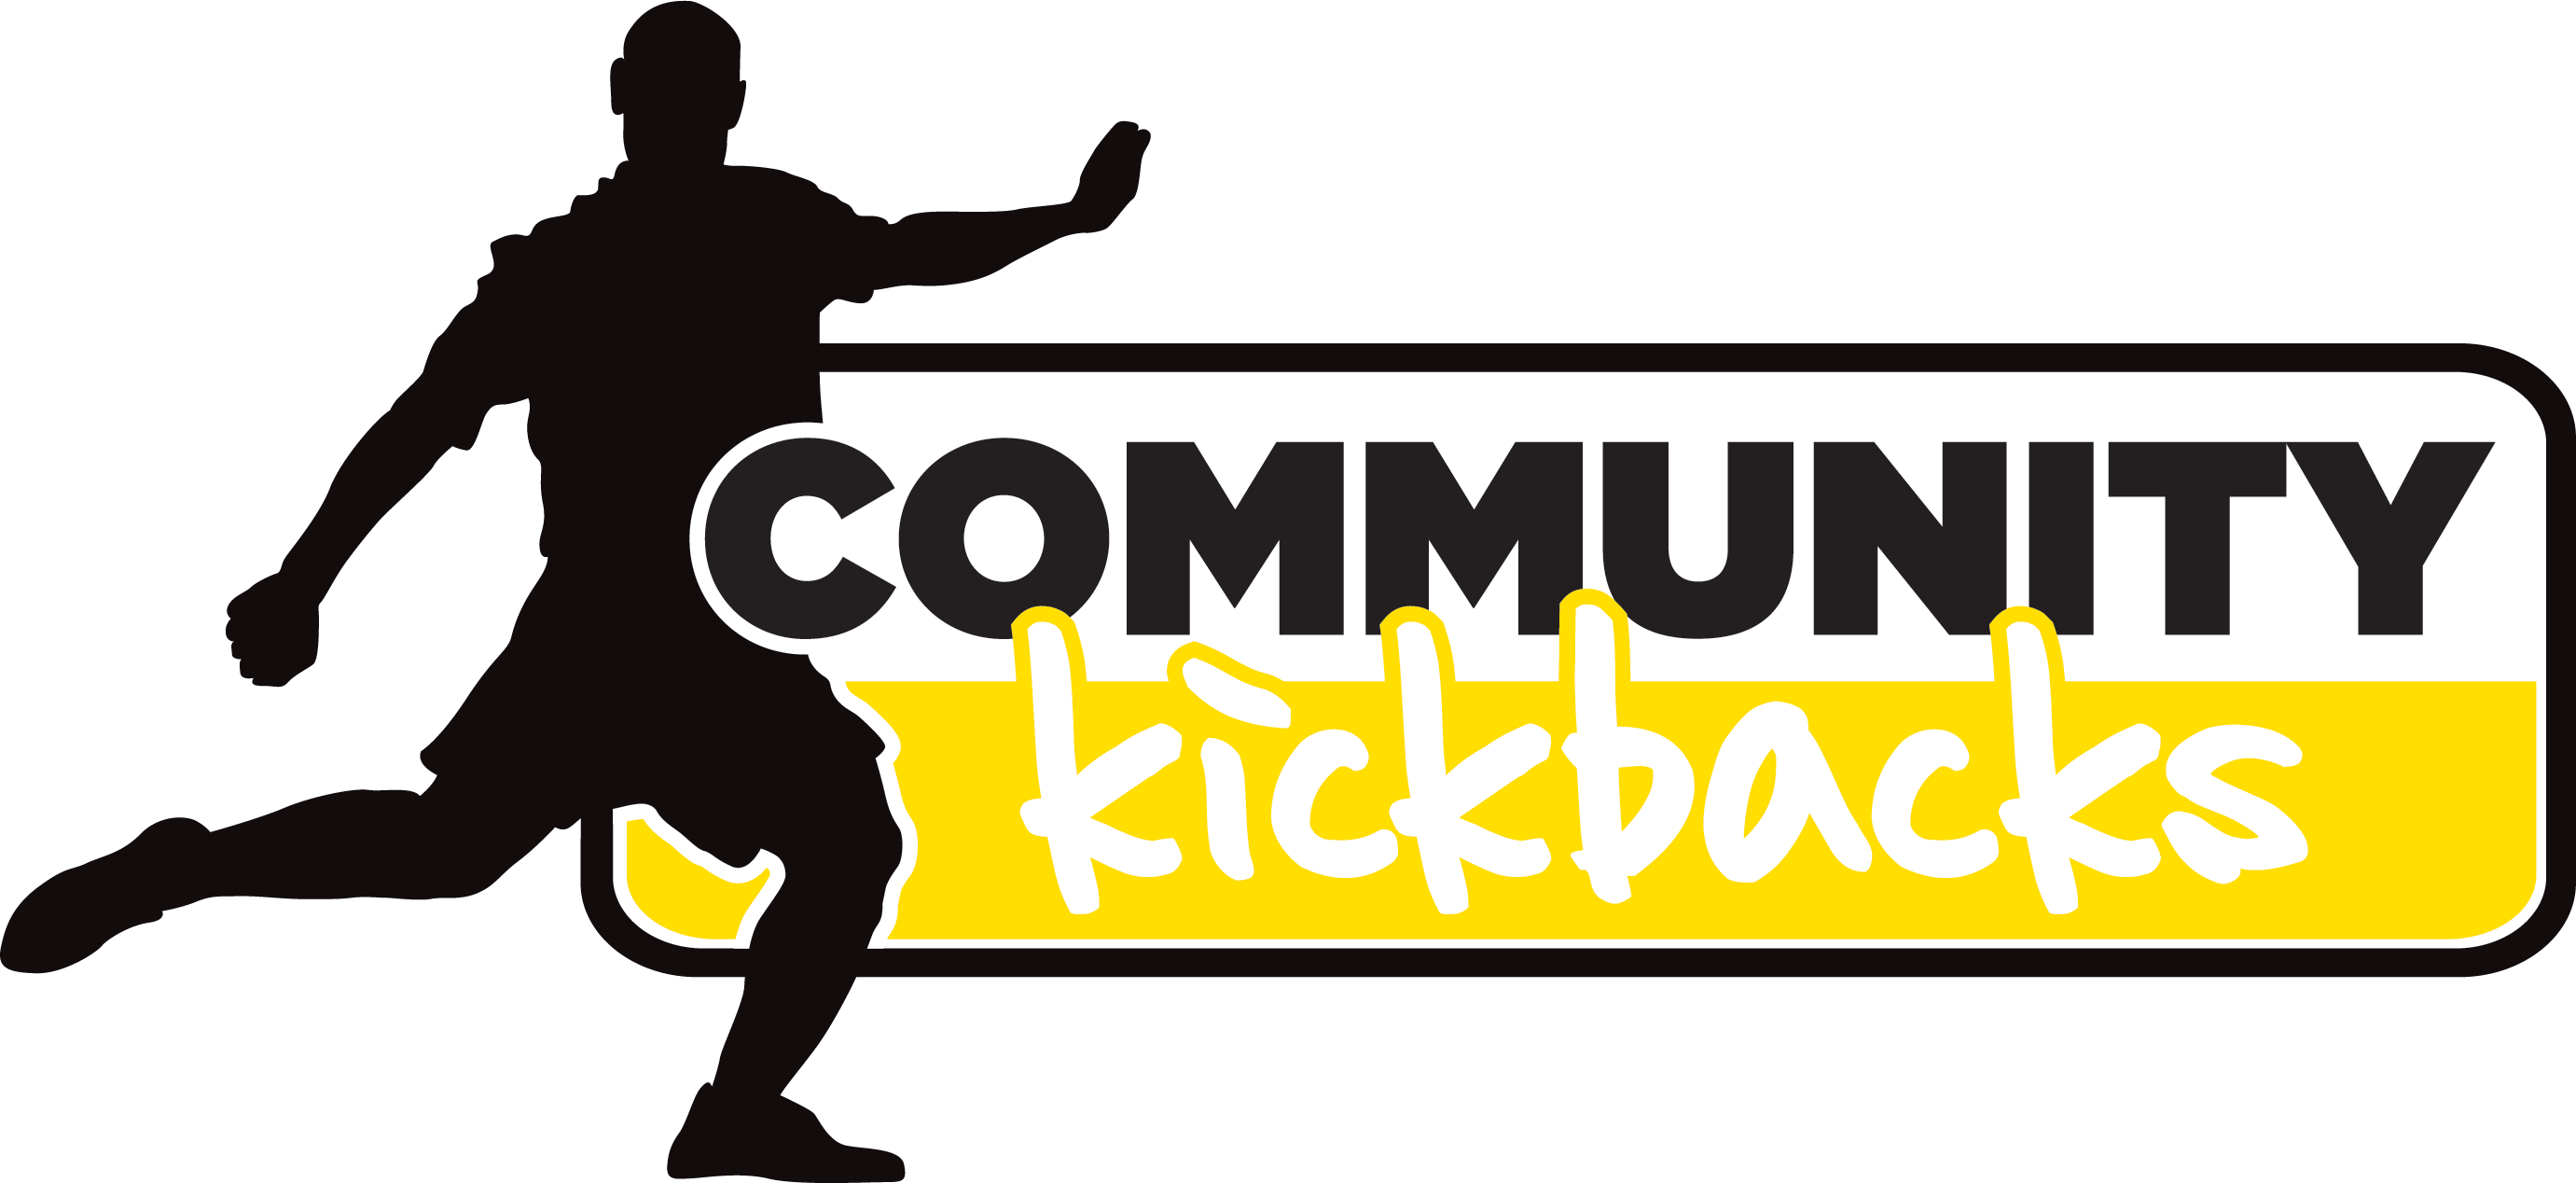 Rebel Community Kickbacks Program - Rebel Sport Community Kickbacks (2762x1268)